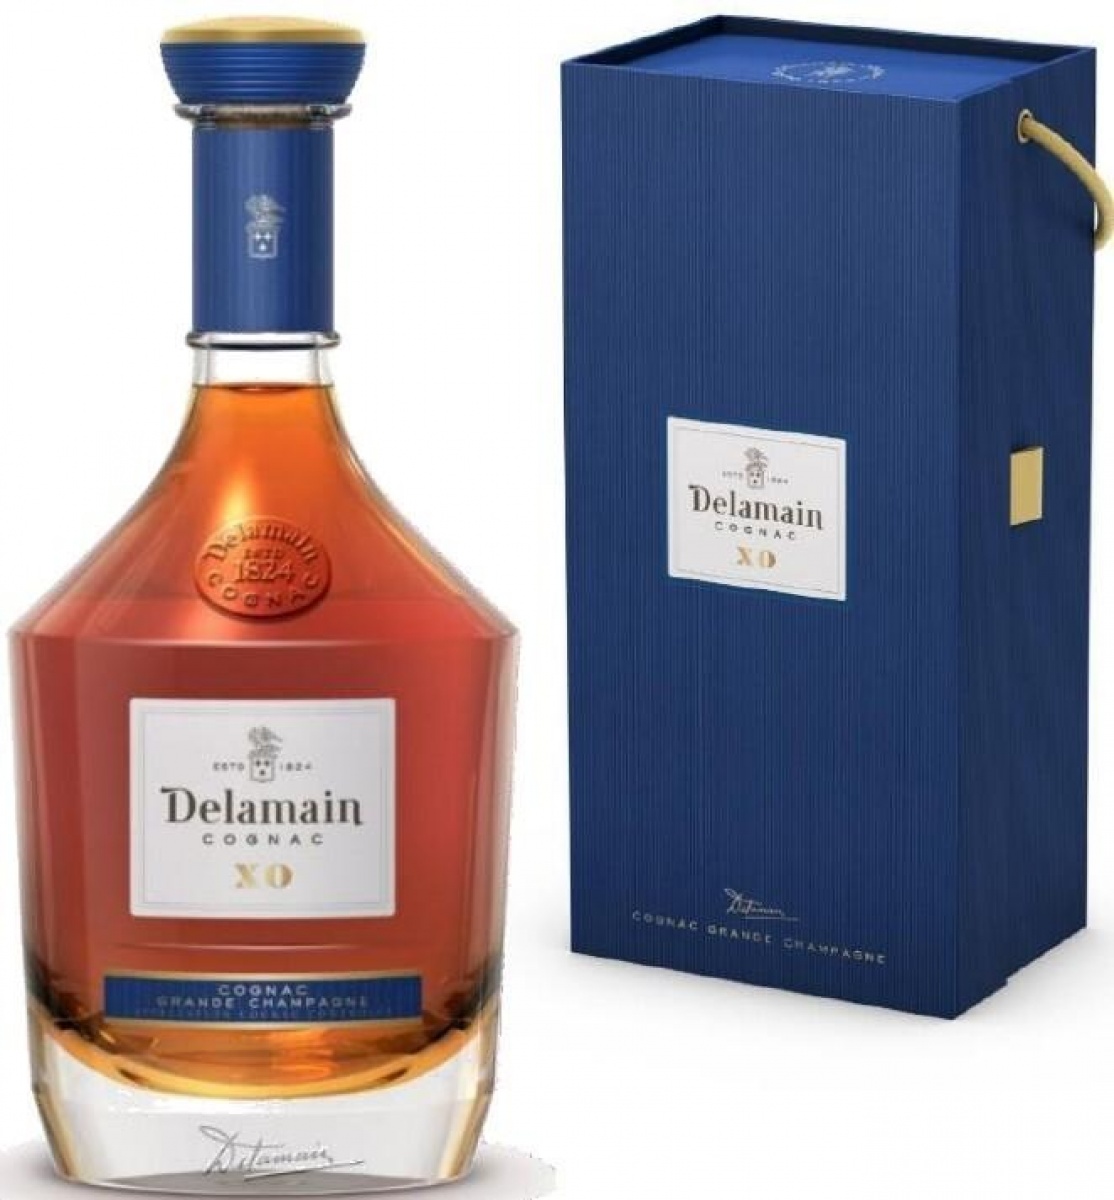 Grande champagne xo. Delamain Cognac XO. Французский коньяк Delamain. Делямэн Хо Гранд шампань коньяк. Delamain Cognac 1967.